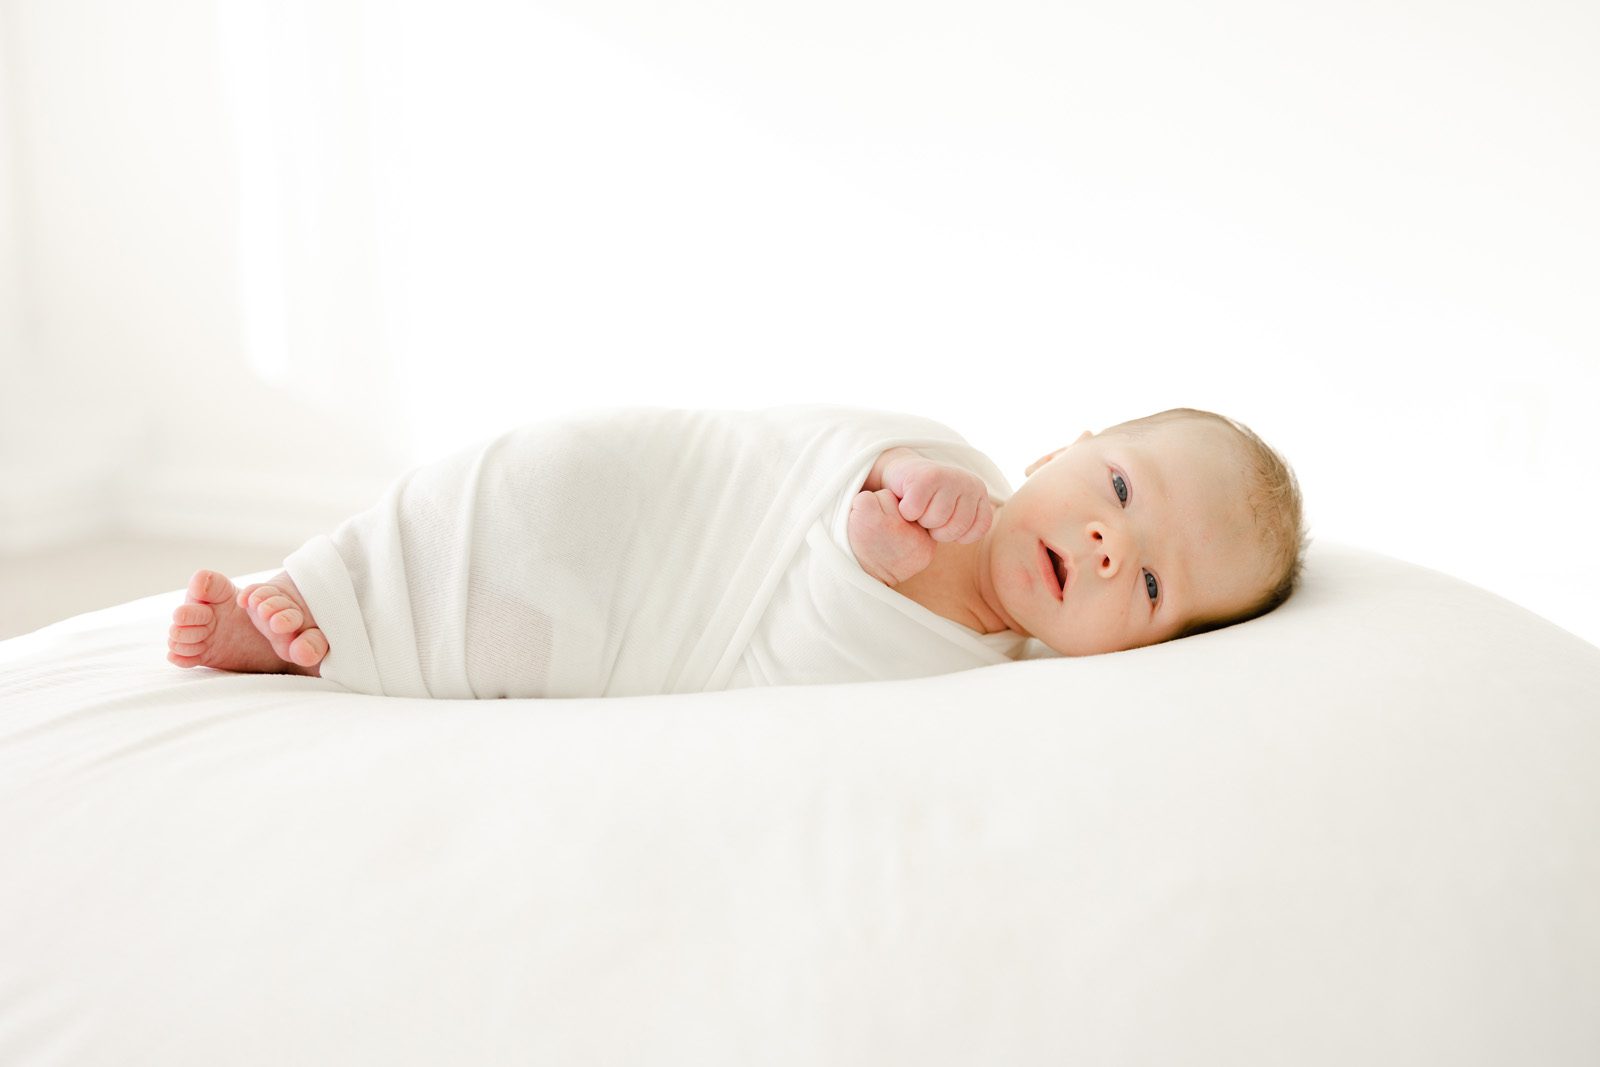 knoxville newborn studio photography, choosing a photographer